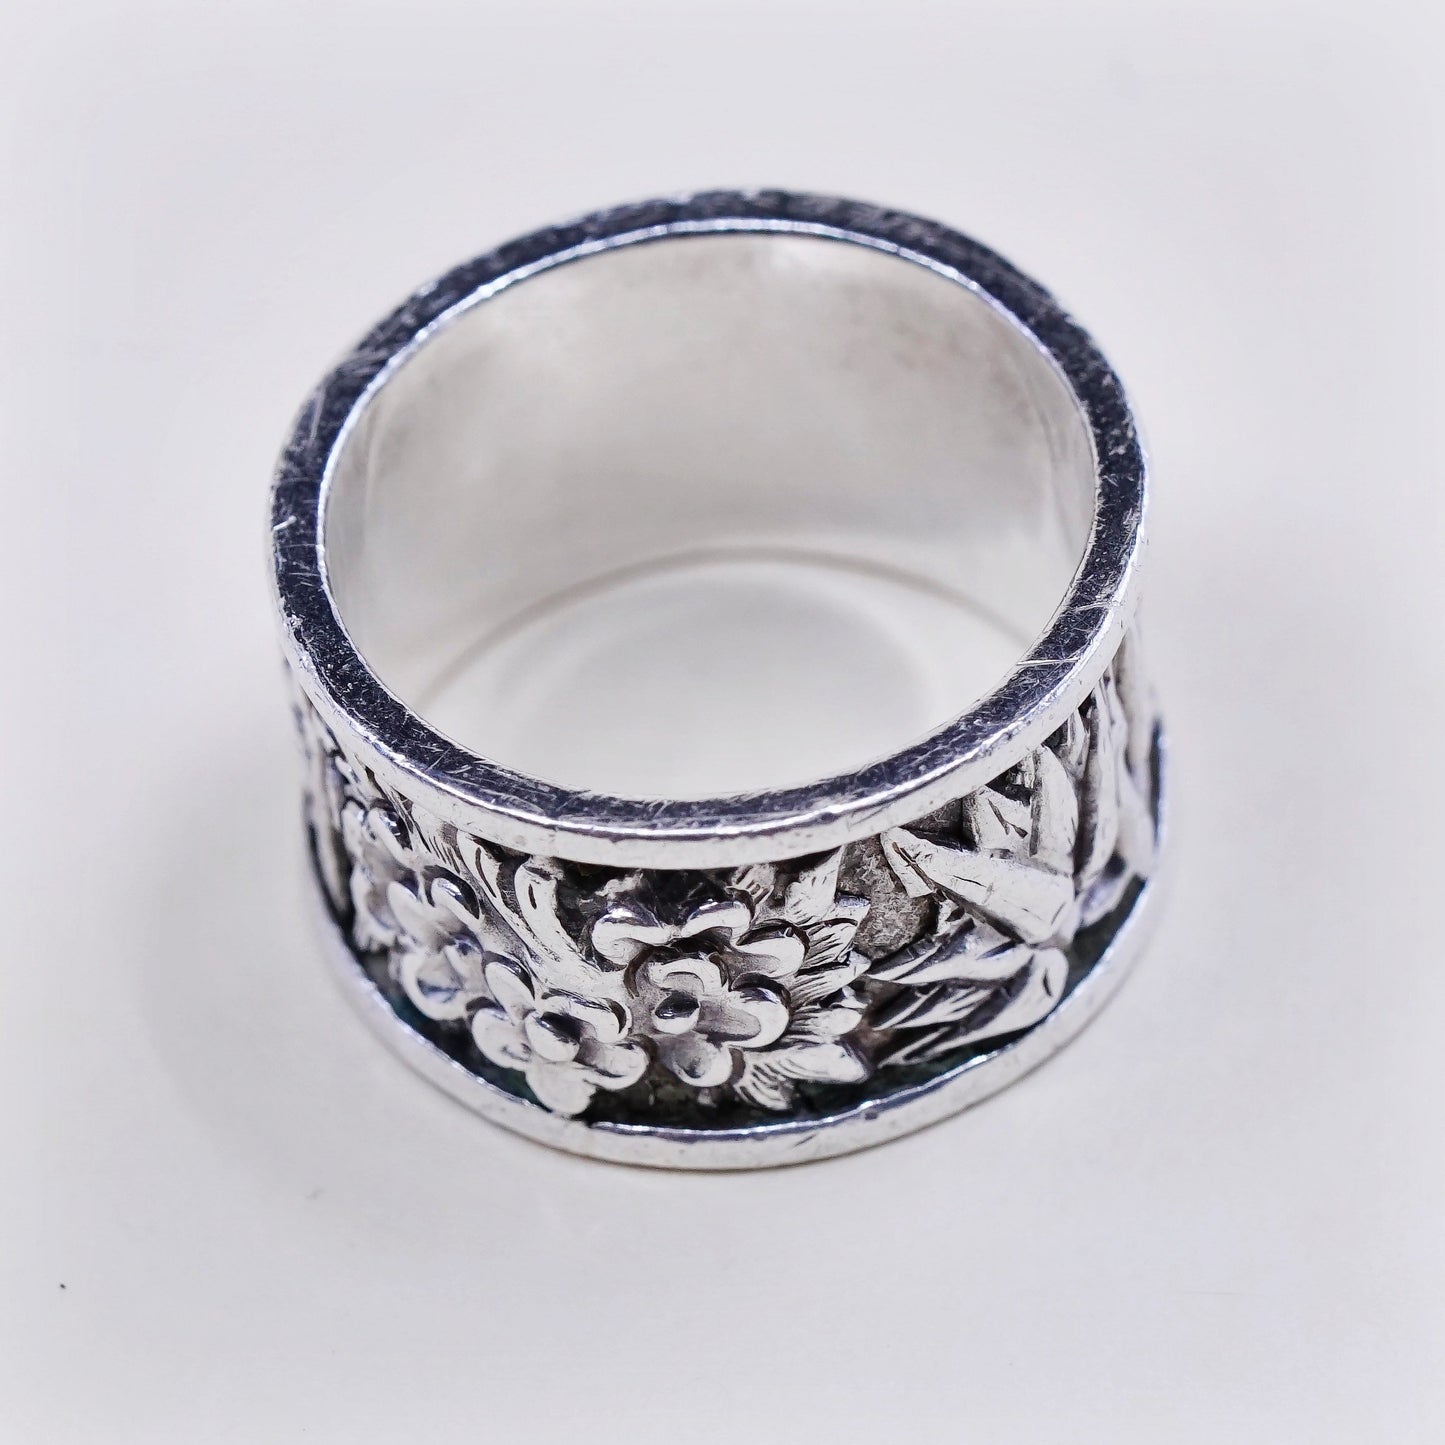 Size 6.25, Vintage sterling silver handmade ring, 925 band w/ flower N leaves